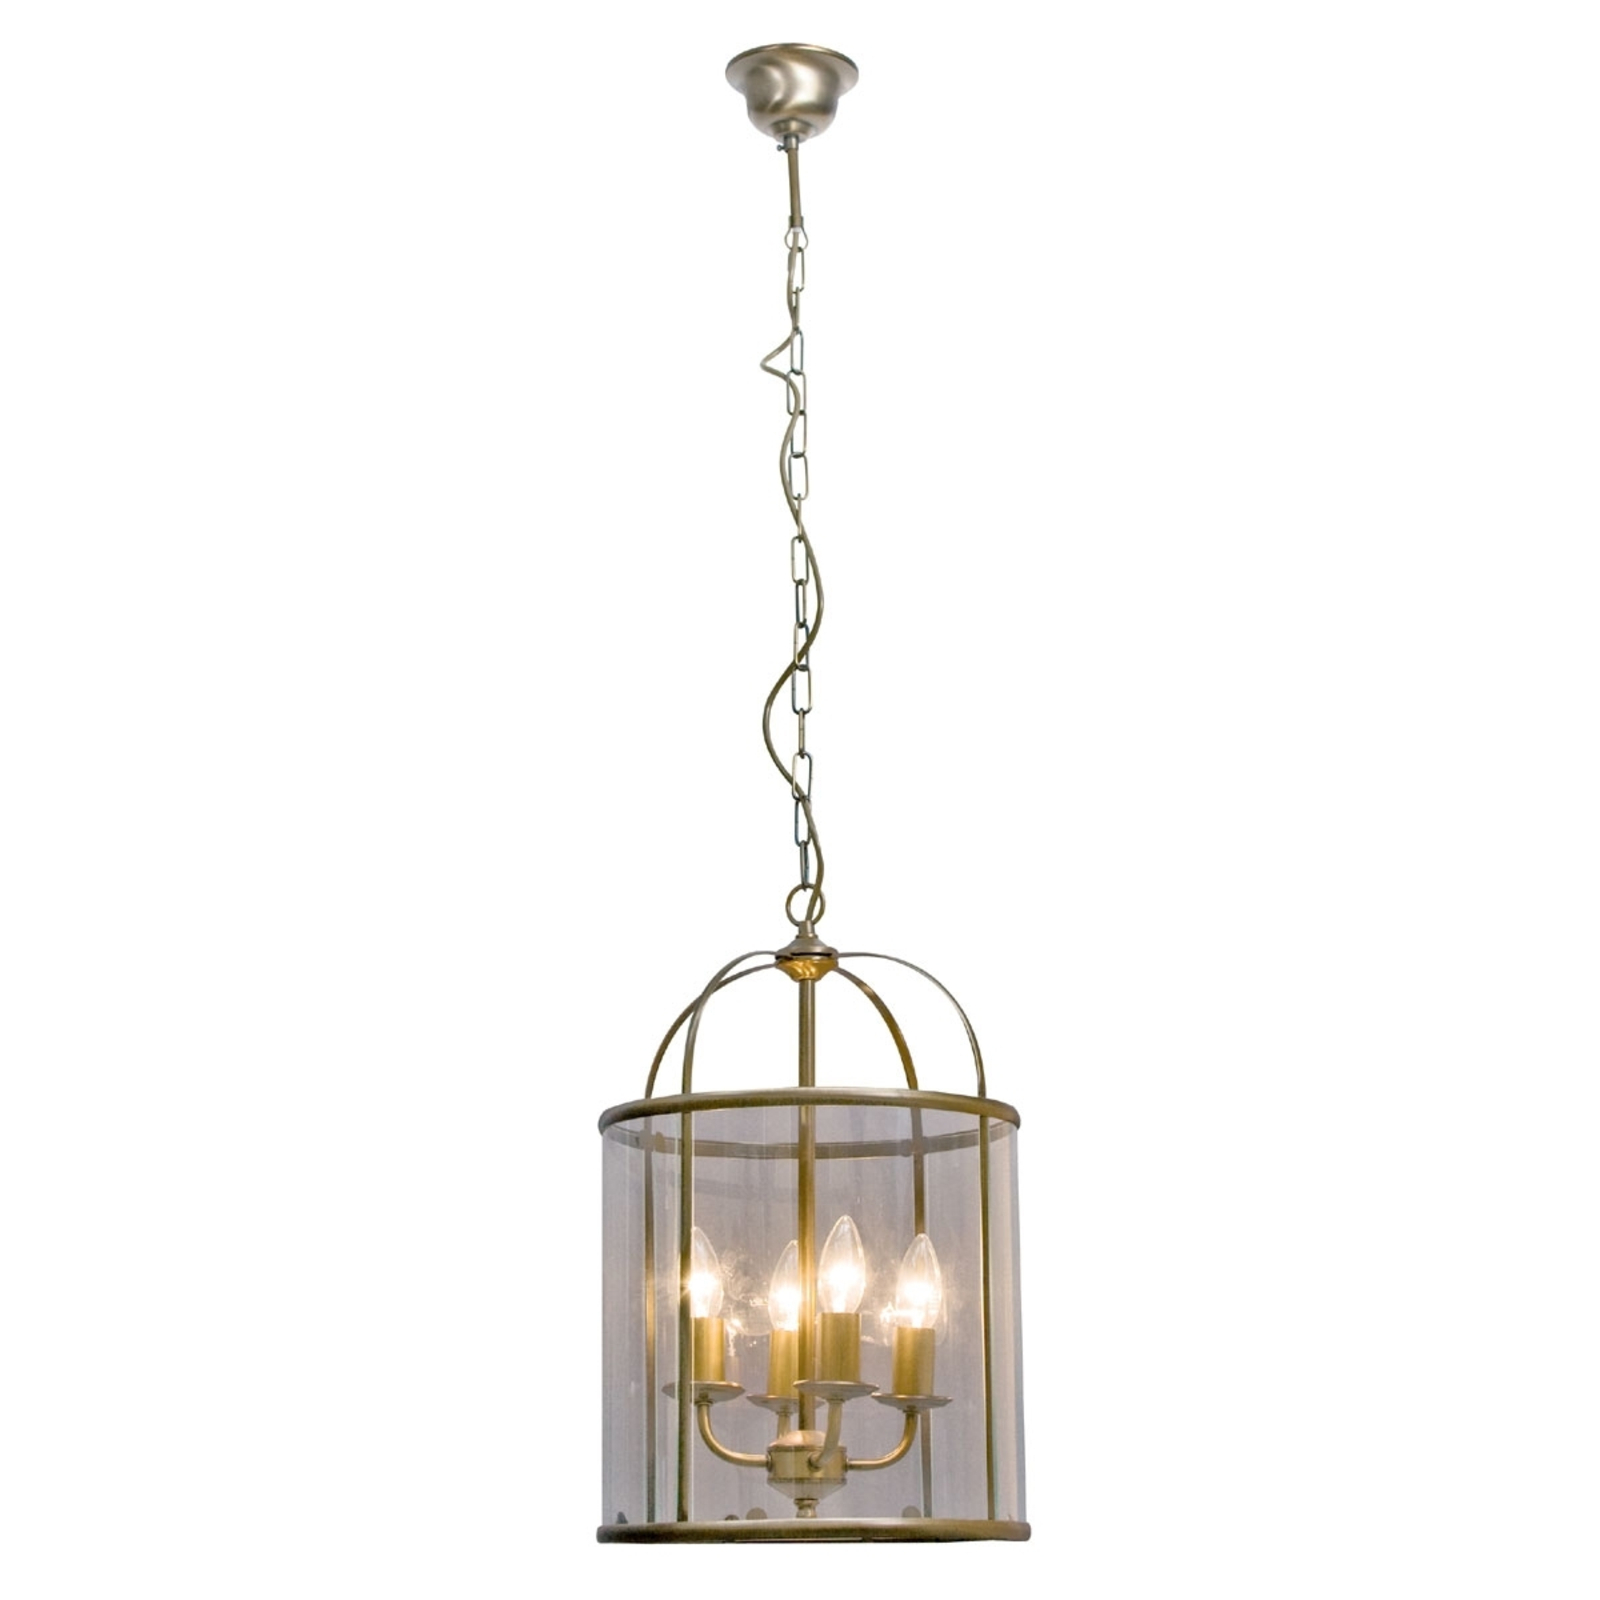 Decoratieve hanglamp Pimpernel, 32 cm